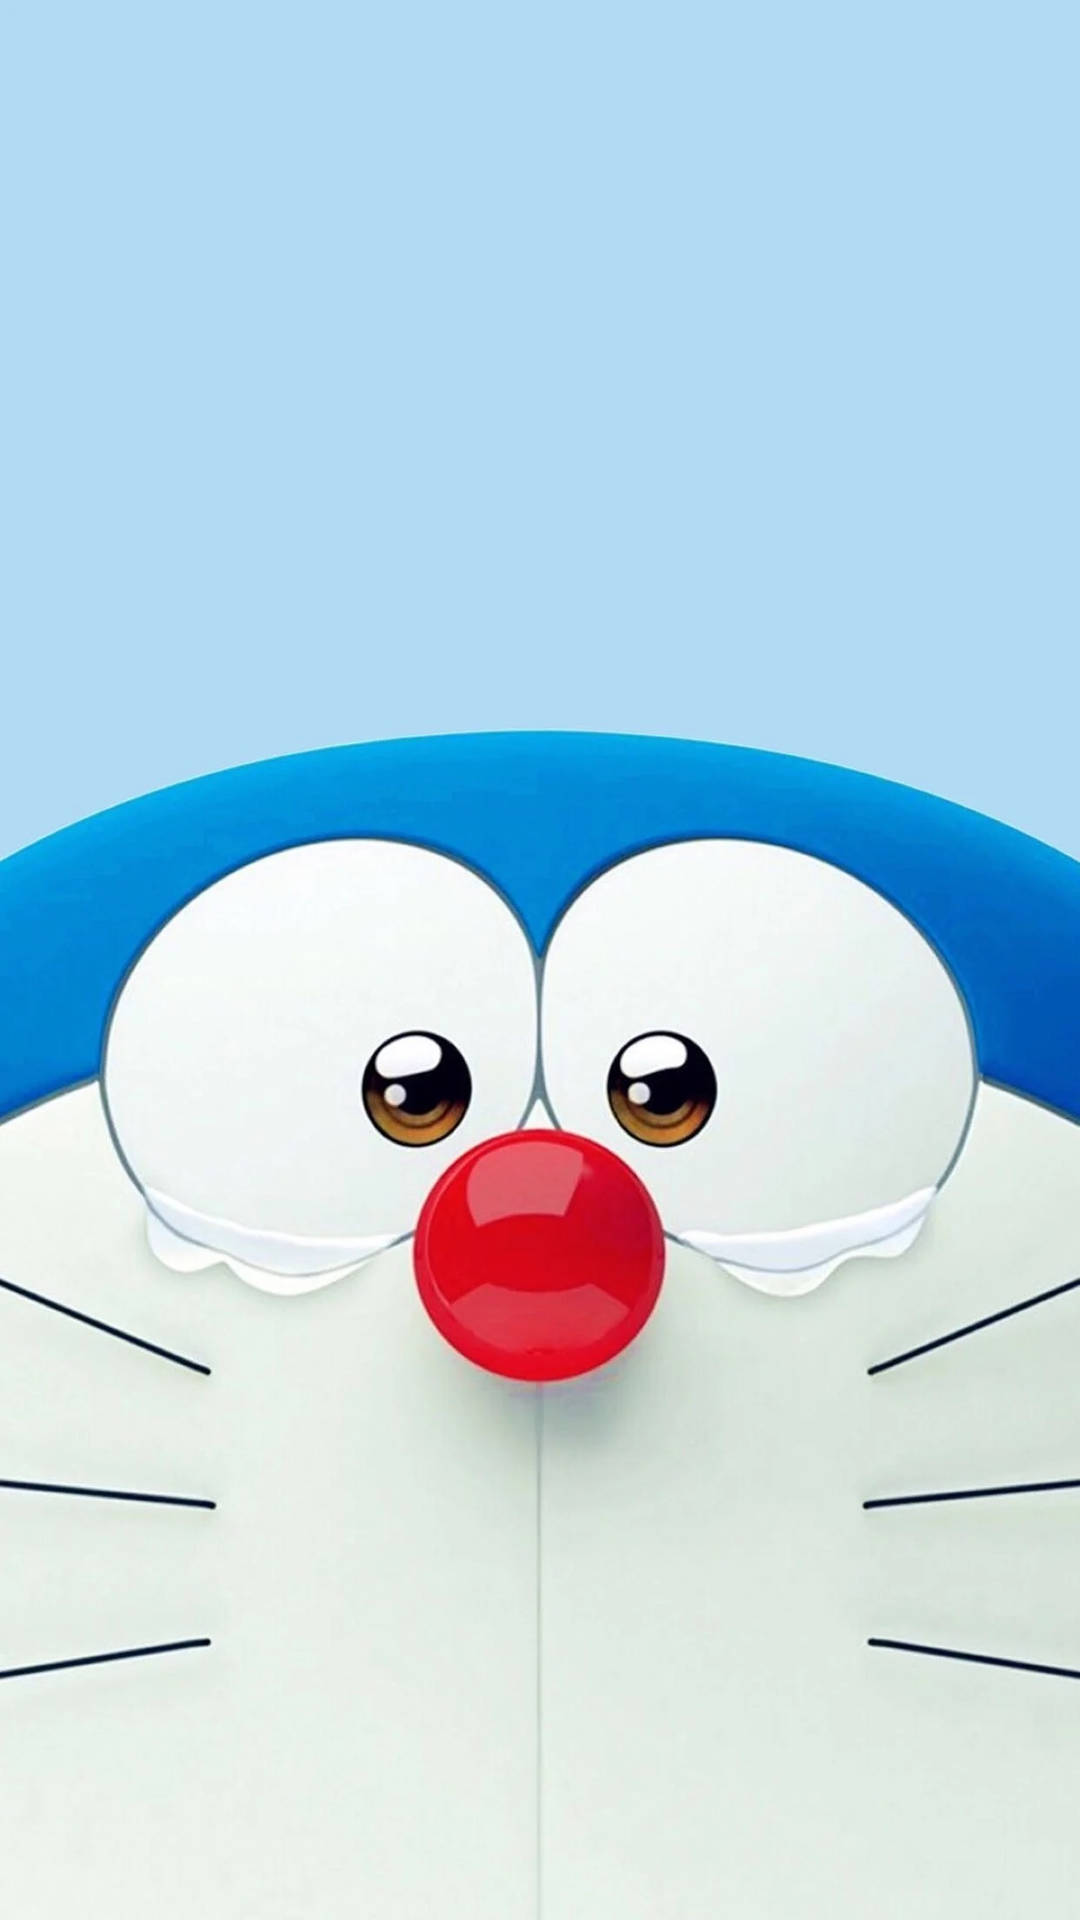 Tearful Doraemon iPhone Digital Art Wallpaper